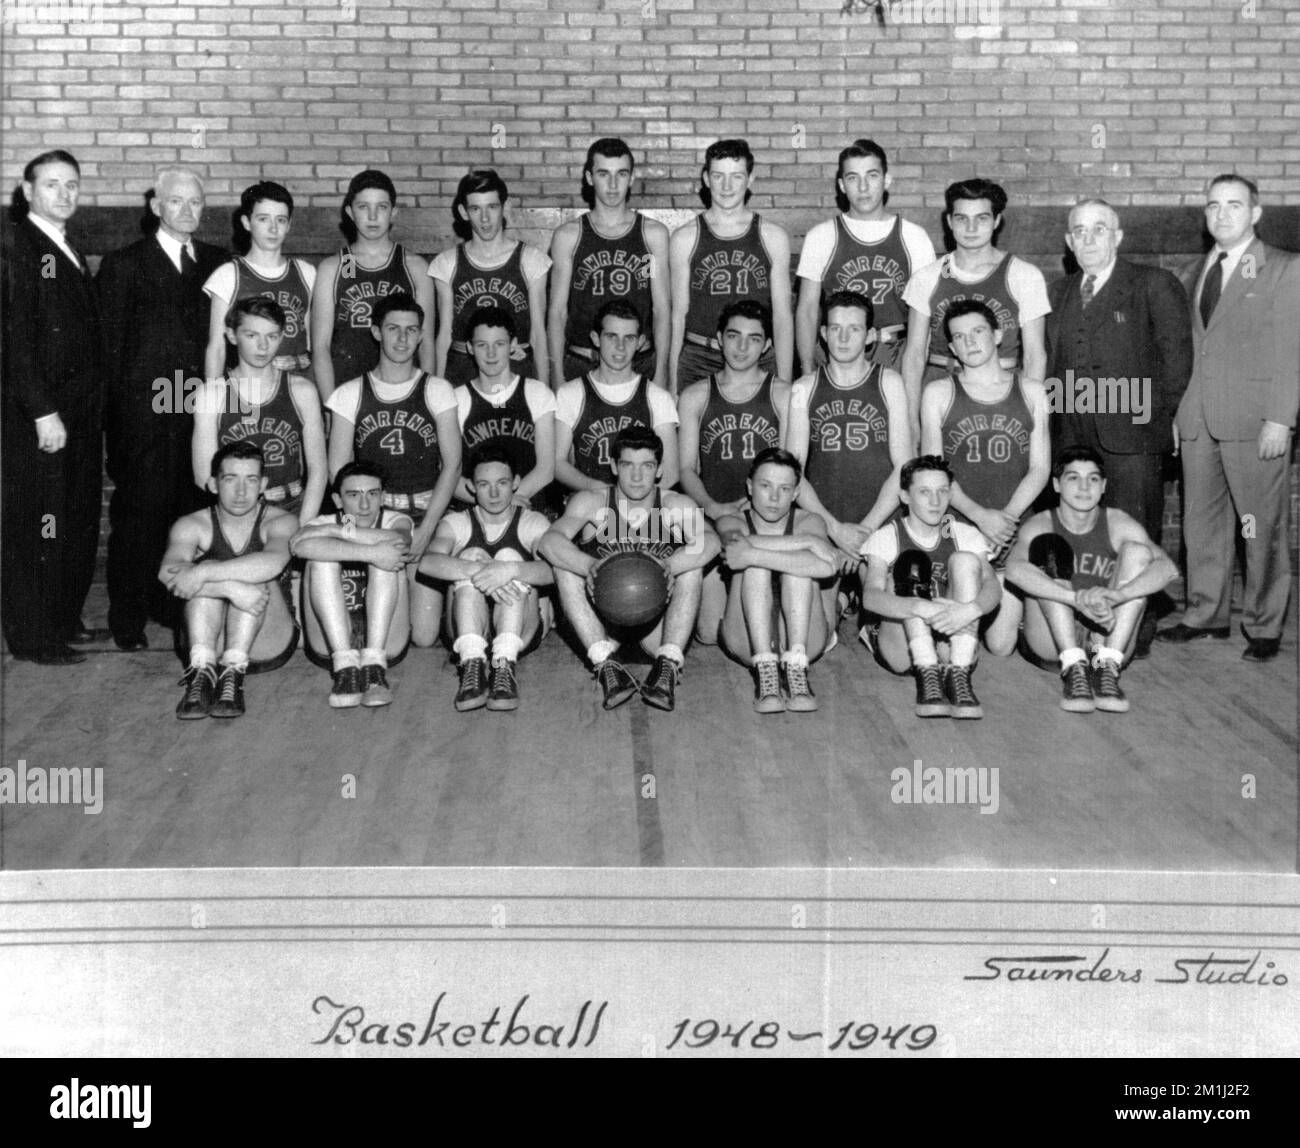 1948 Lawrence High School basketball team , Basketball players, Lawrence High School Lawrence, Mass. Stock Photo